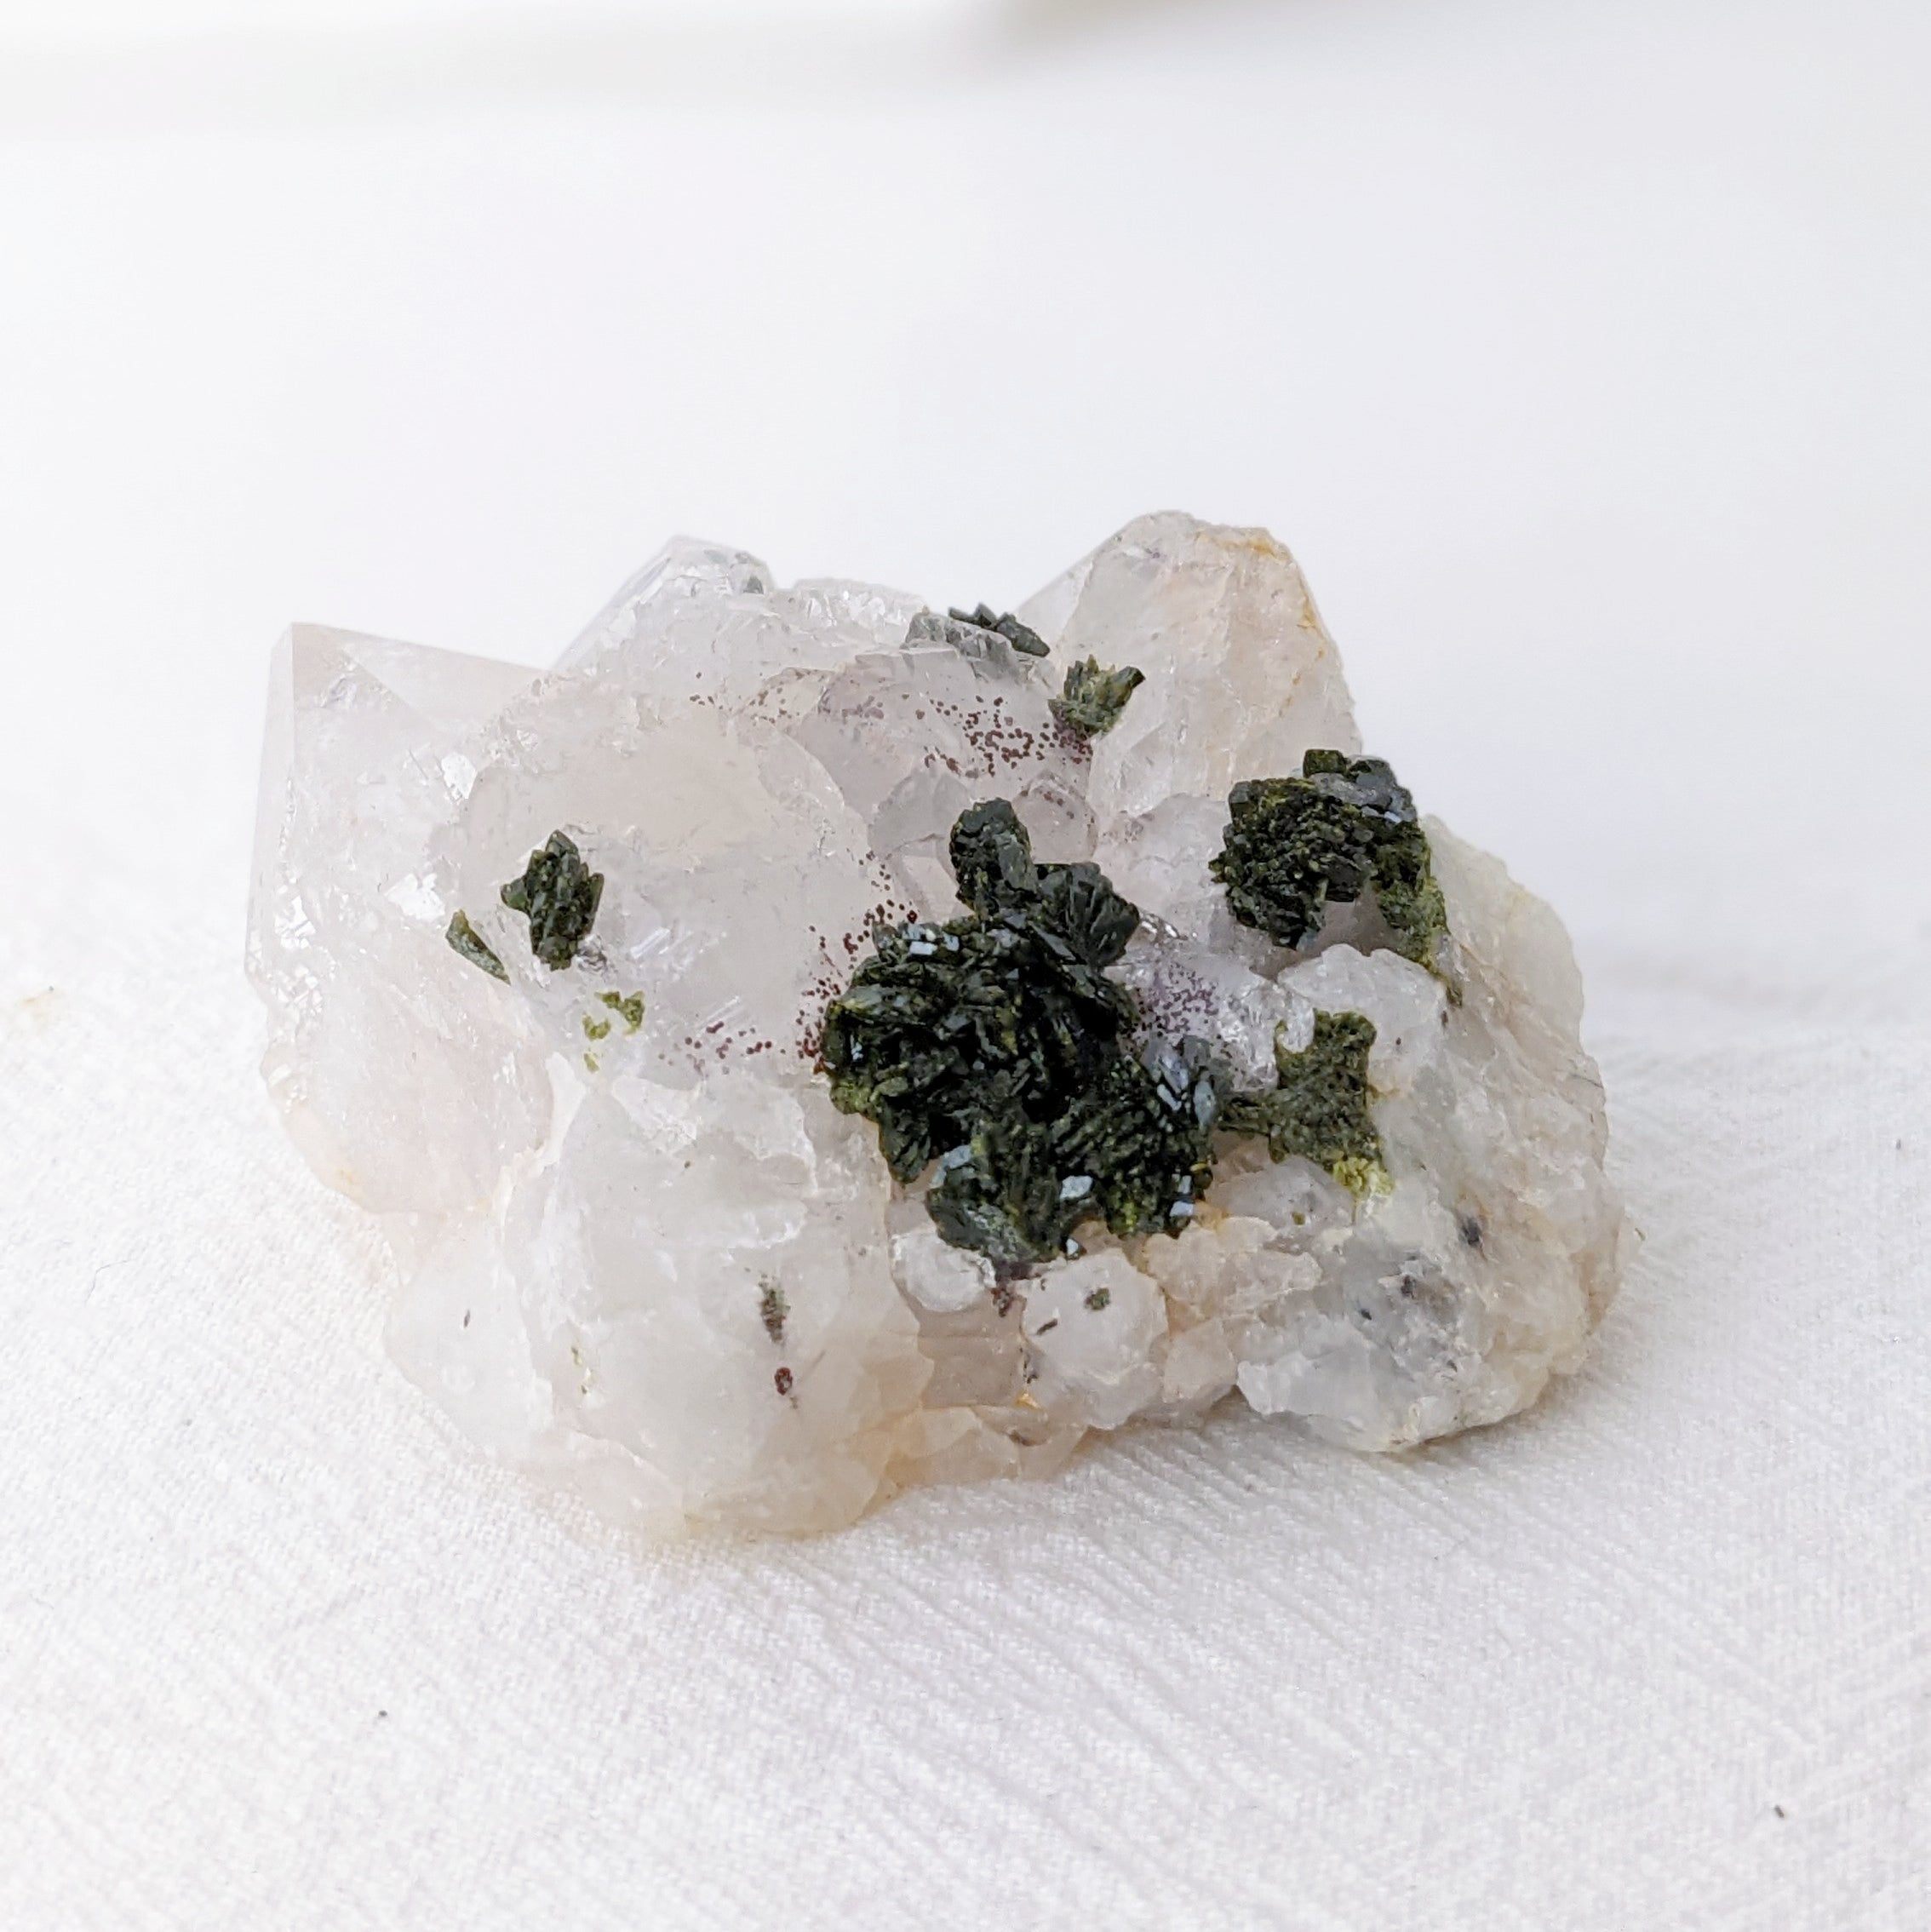 [EP06] Epidote with Clear Quartz 綠簾石水晶共生(花園水晶)